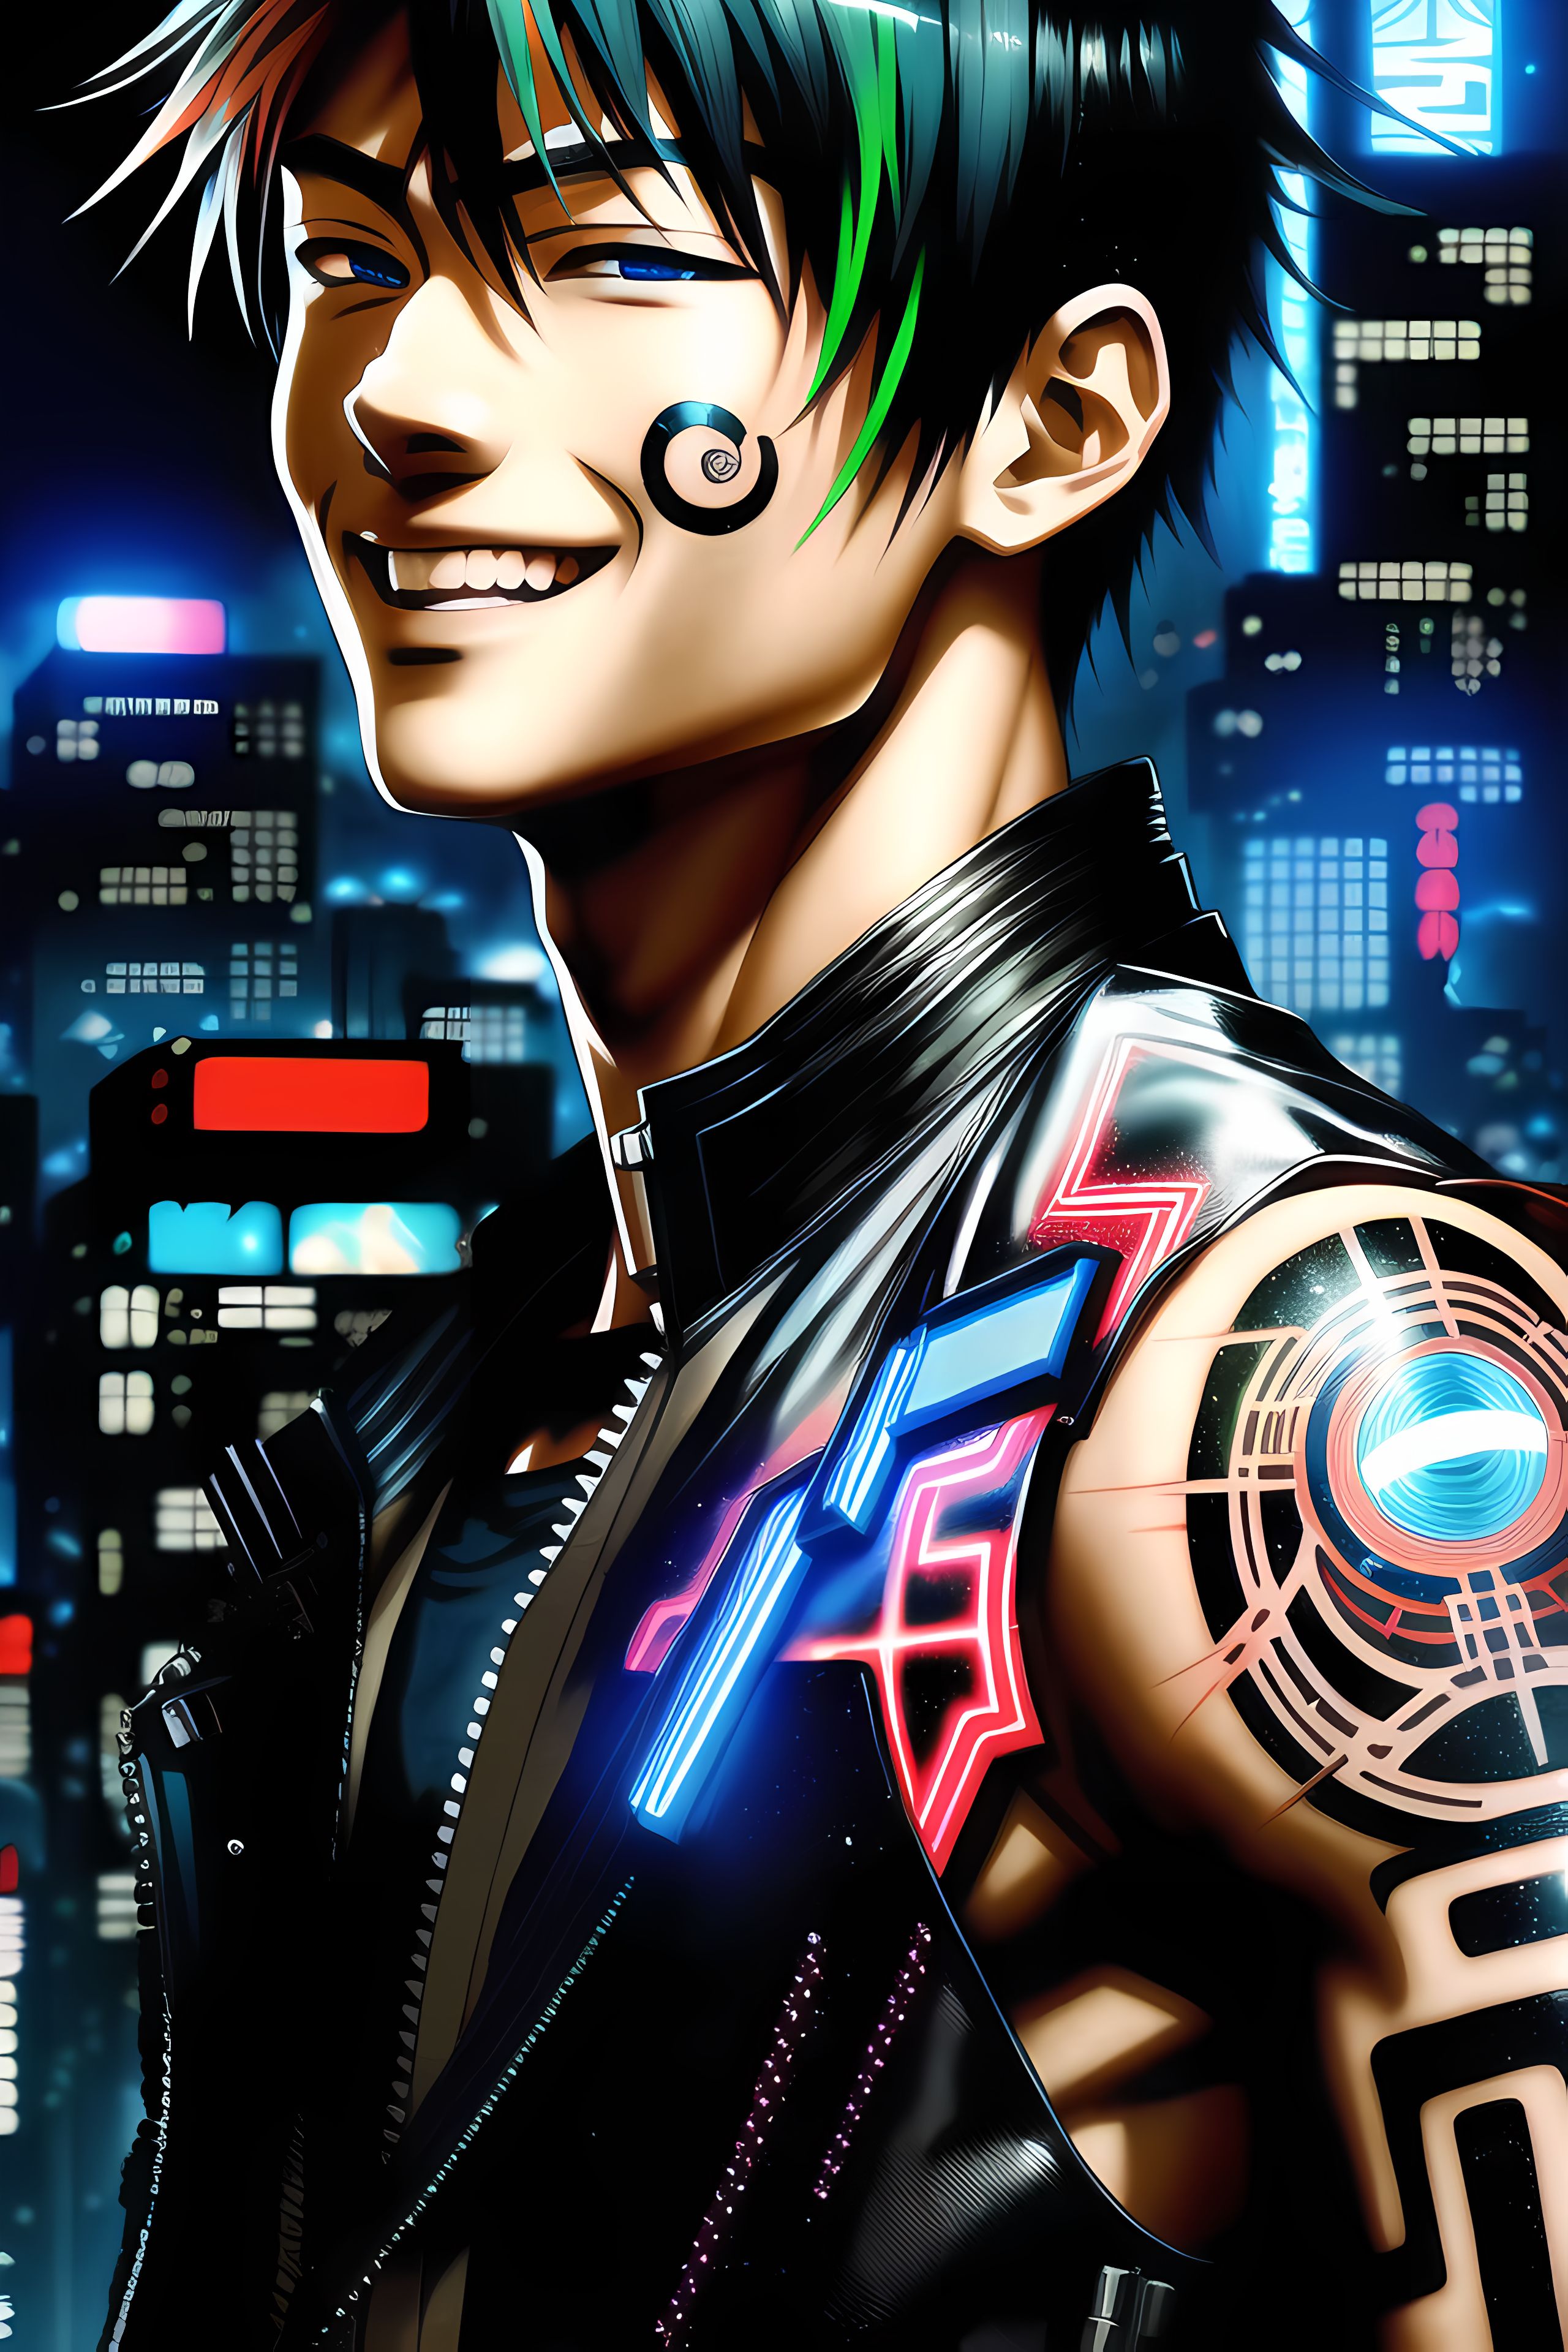 Anime boy - Cyberpunk character by Allydity2412 on DeviantArt